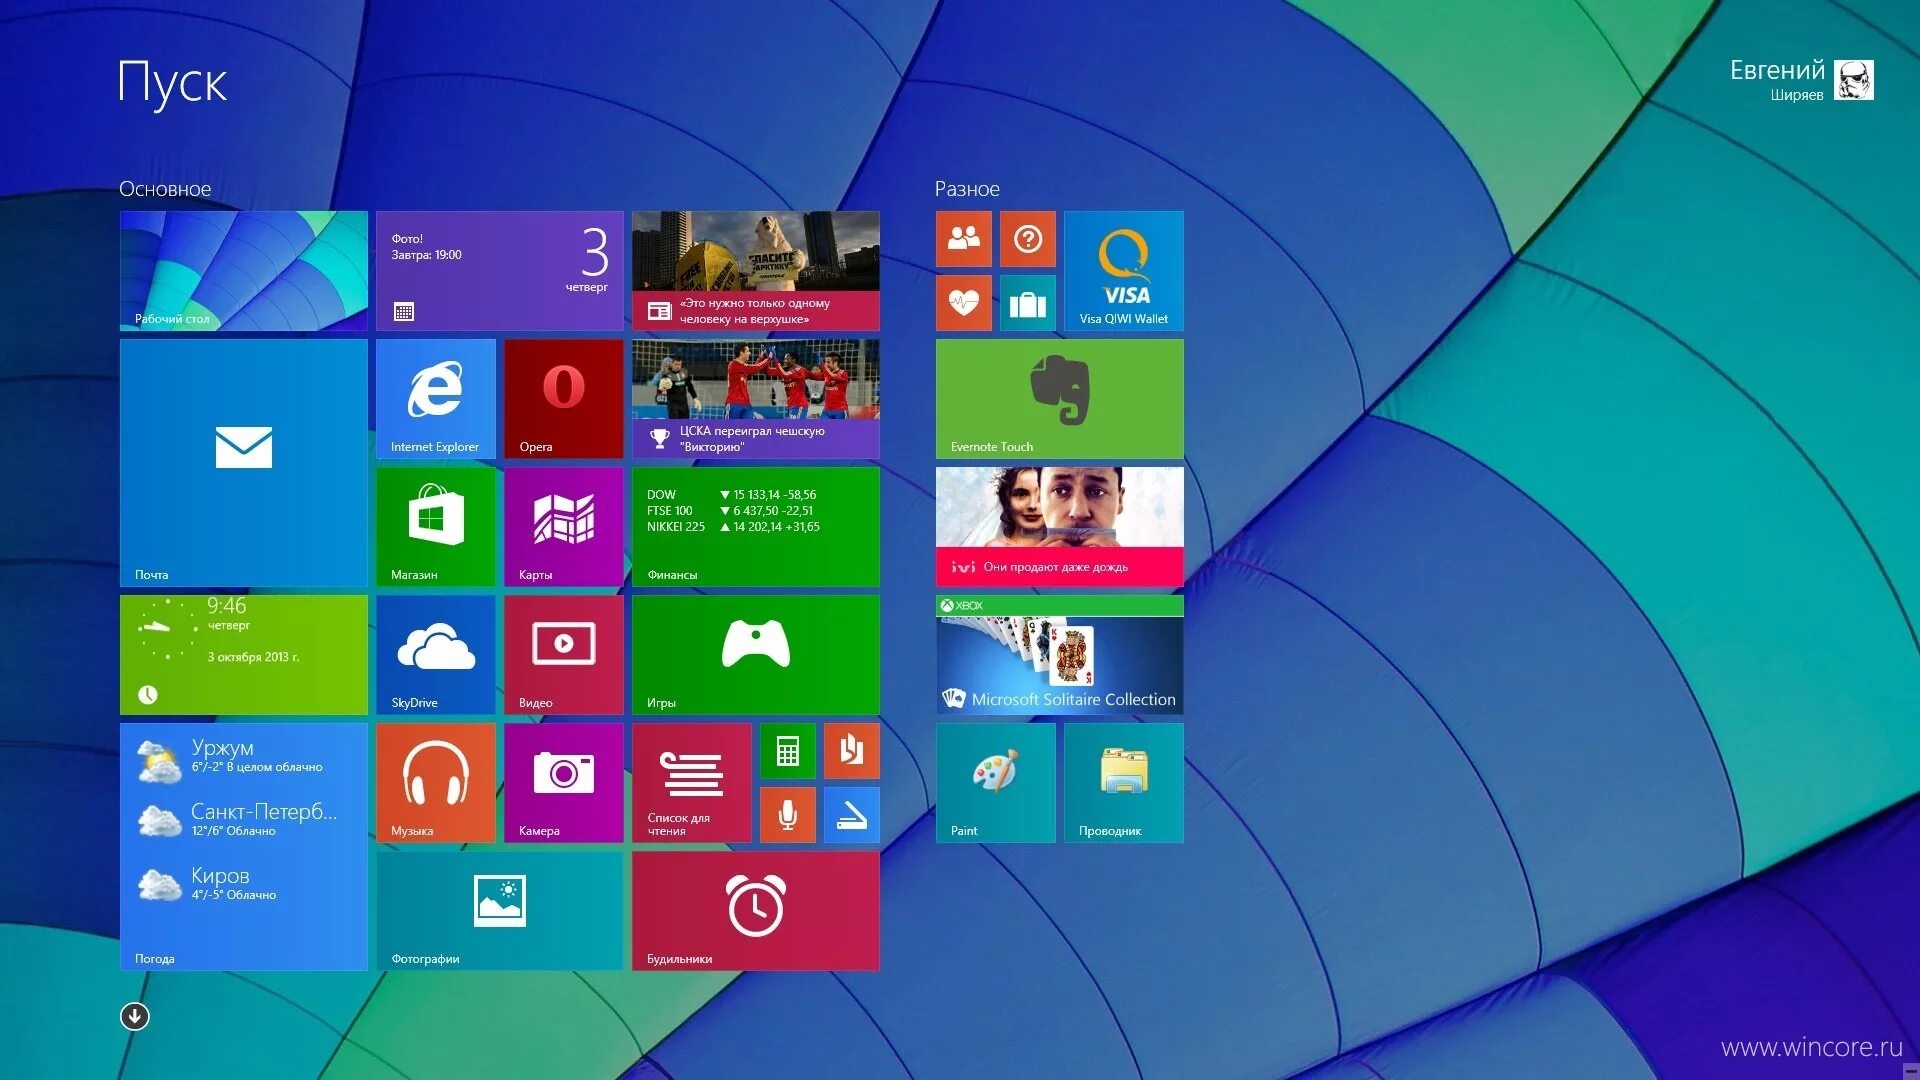 Экрана 8 и 10 1. ОС виндовс 8.1. Windows 8 рабочий стол. Windows 8.1 рабочий стол. Фото рабочего стола Windows 8.